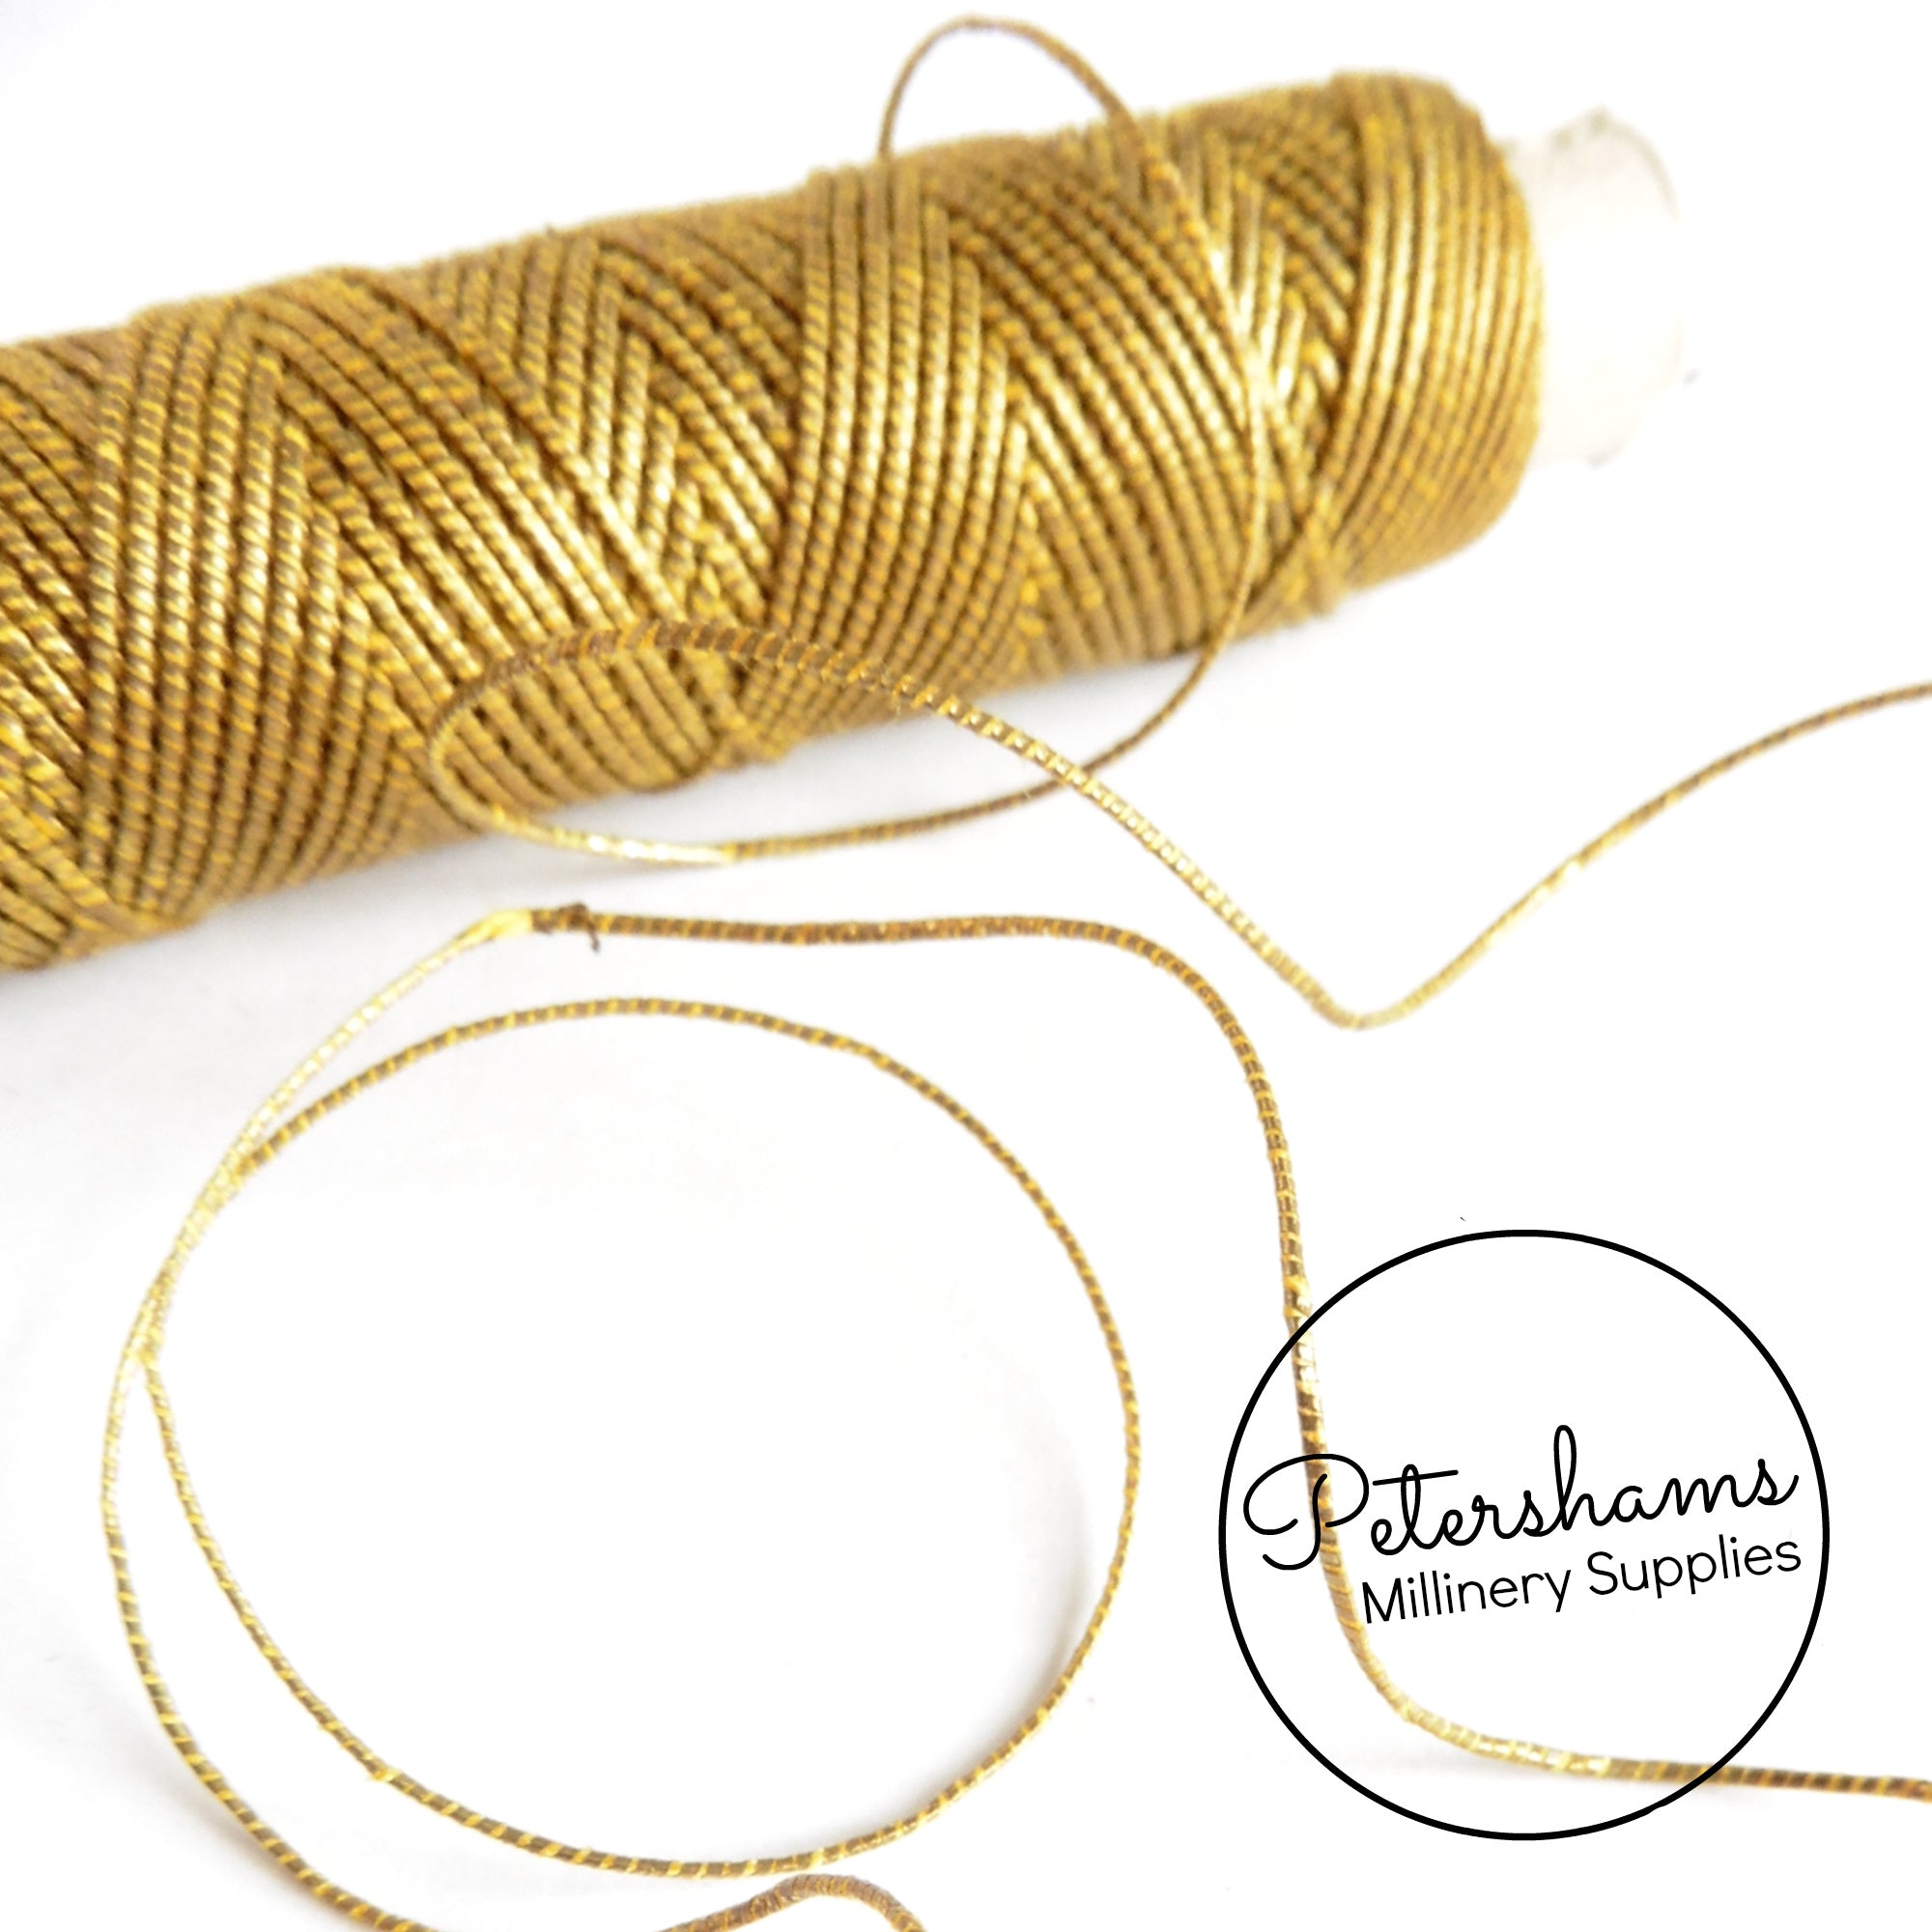 Fine Line Embroidery Thread 60wt 1500m-Zinnia Gold T642